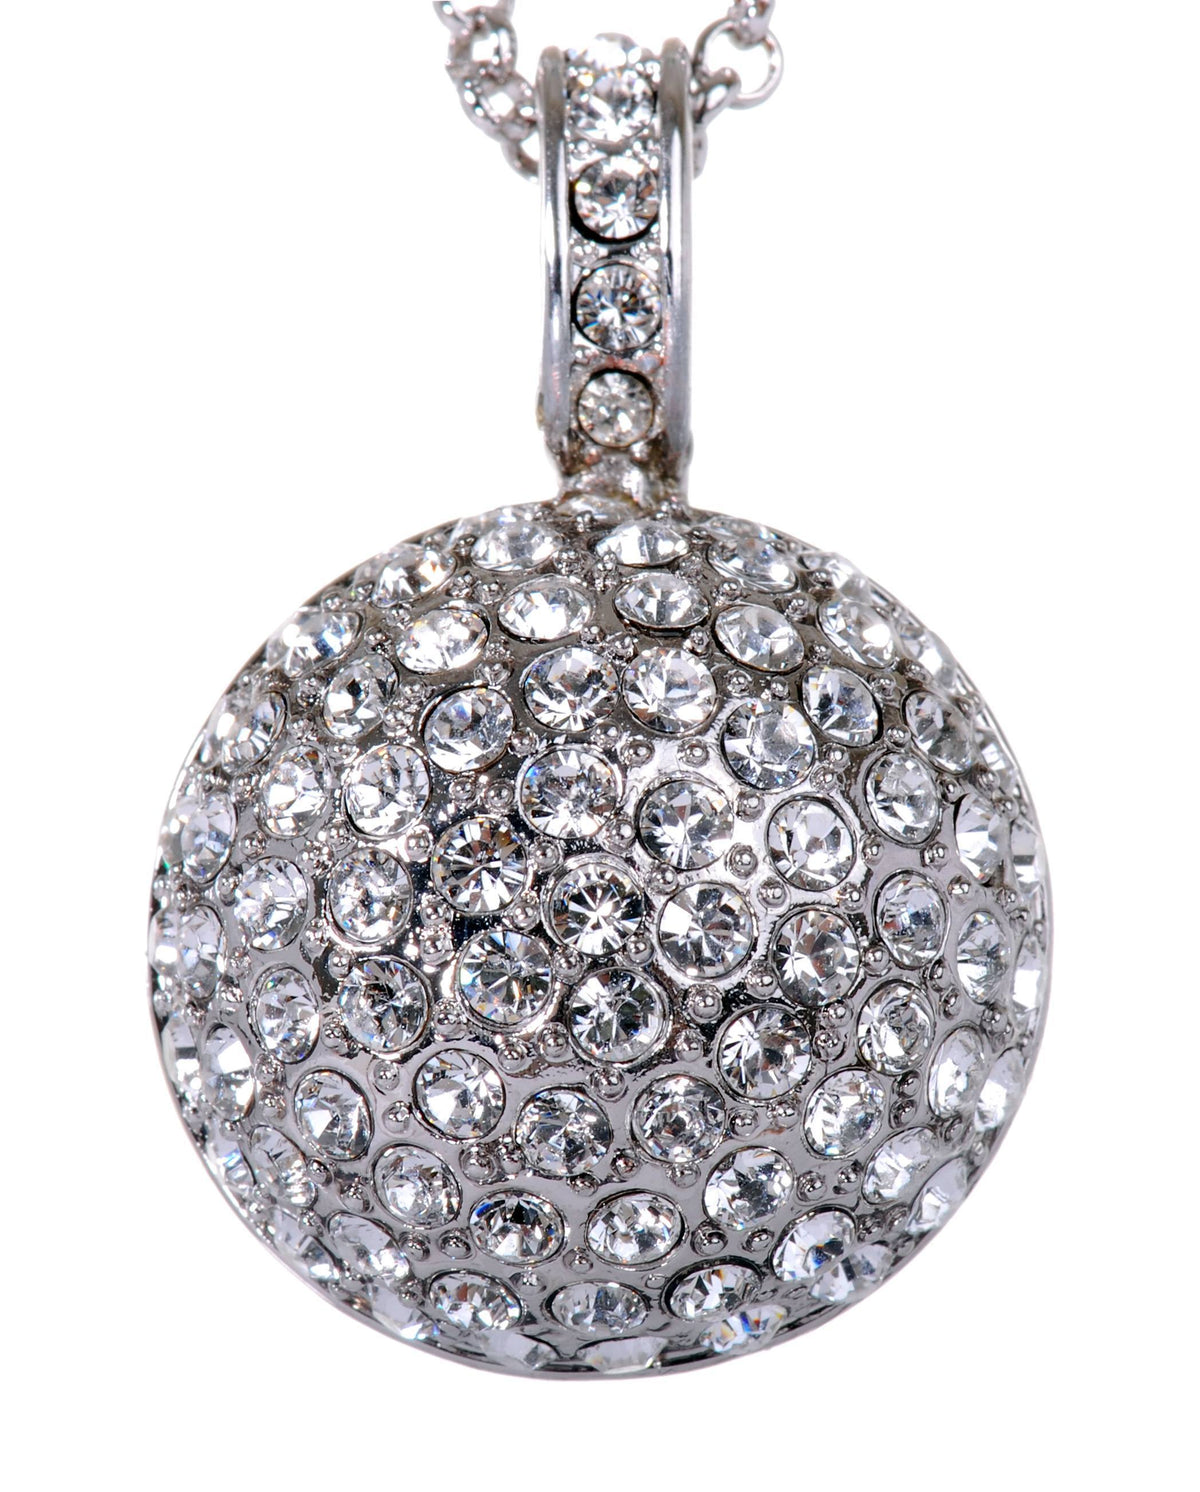 N7196 Rhodium Swarovski Half Ball Pendant Necklace Crystal